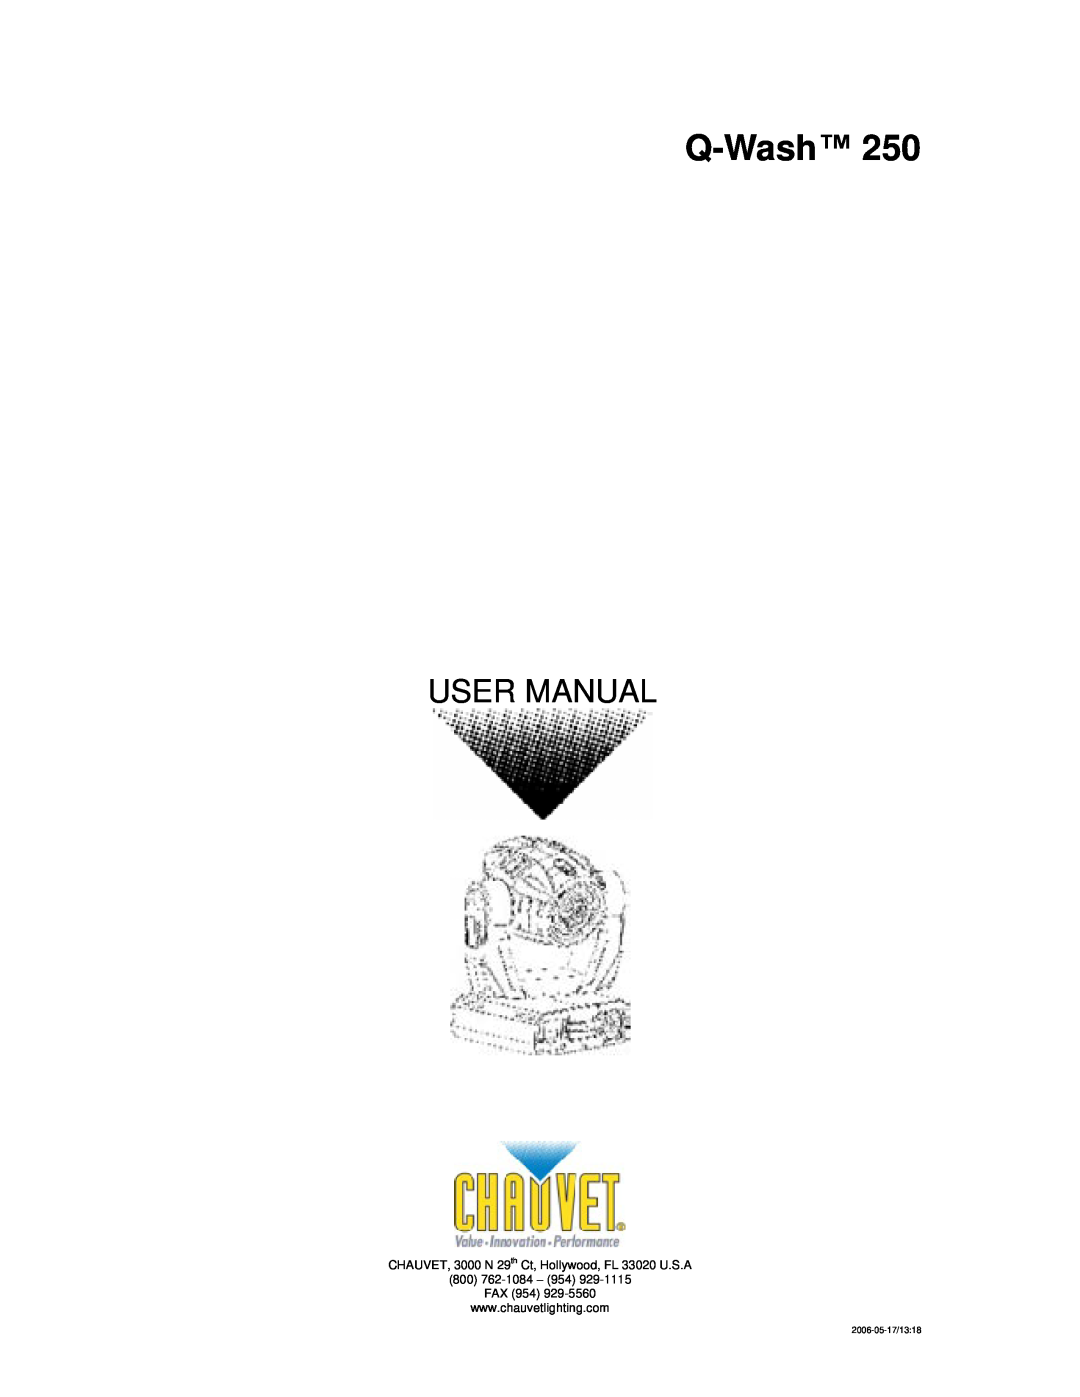 Chauvet 250 user manual 